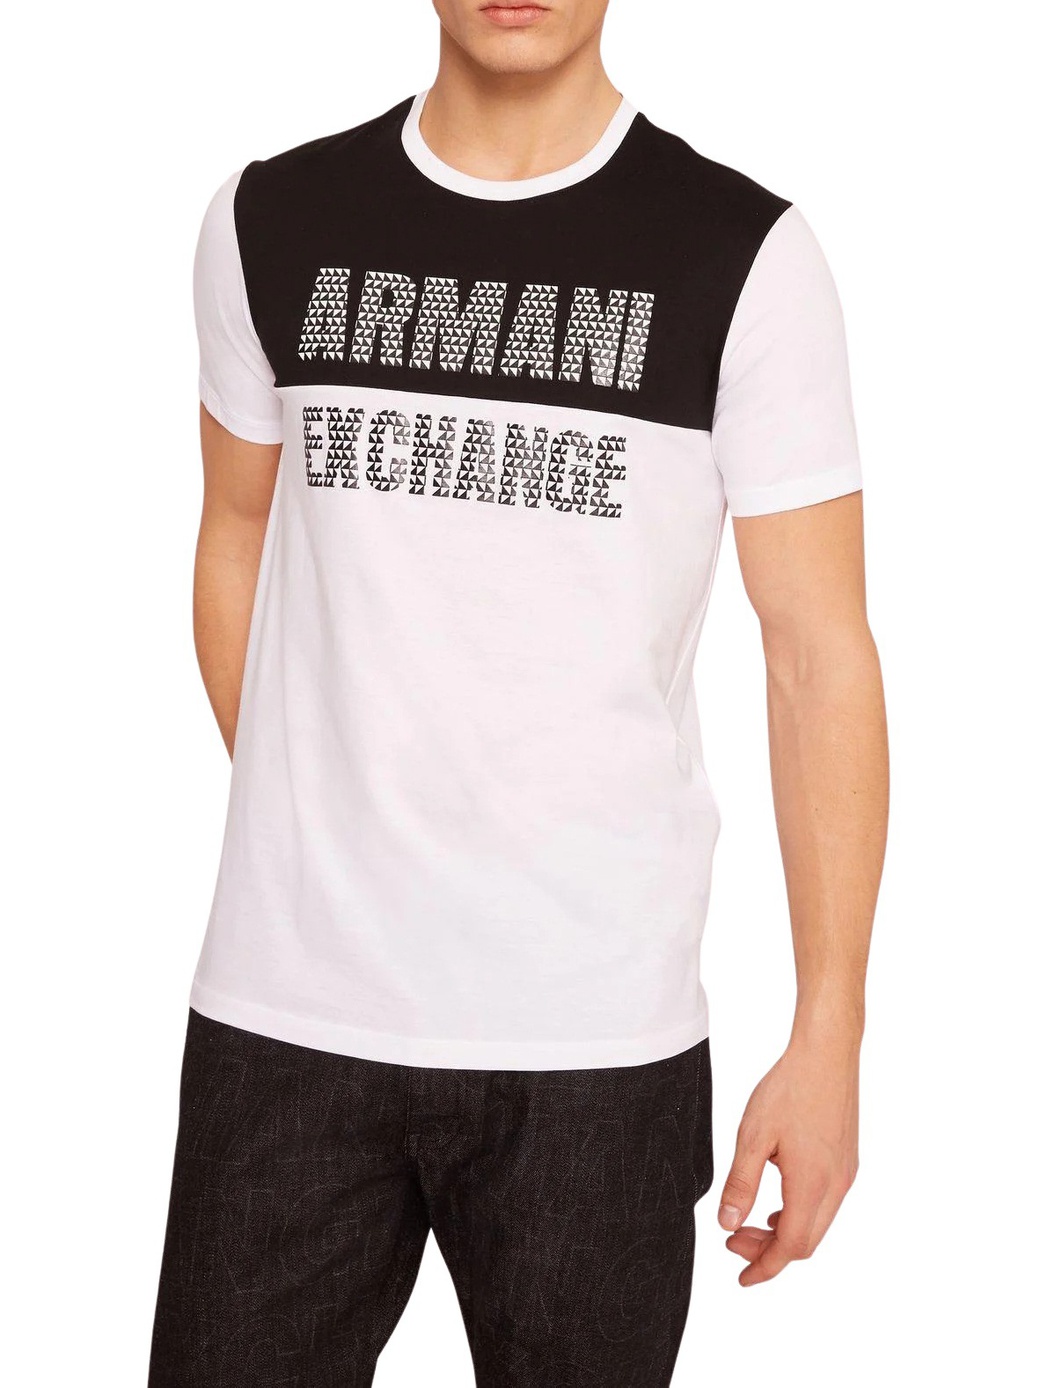 Футболка Armani Exchange с надписью 6zztbx, черно-белый фото